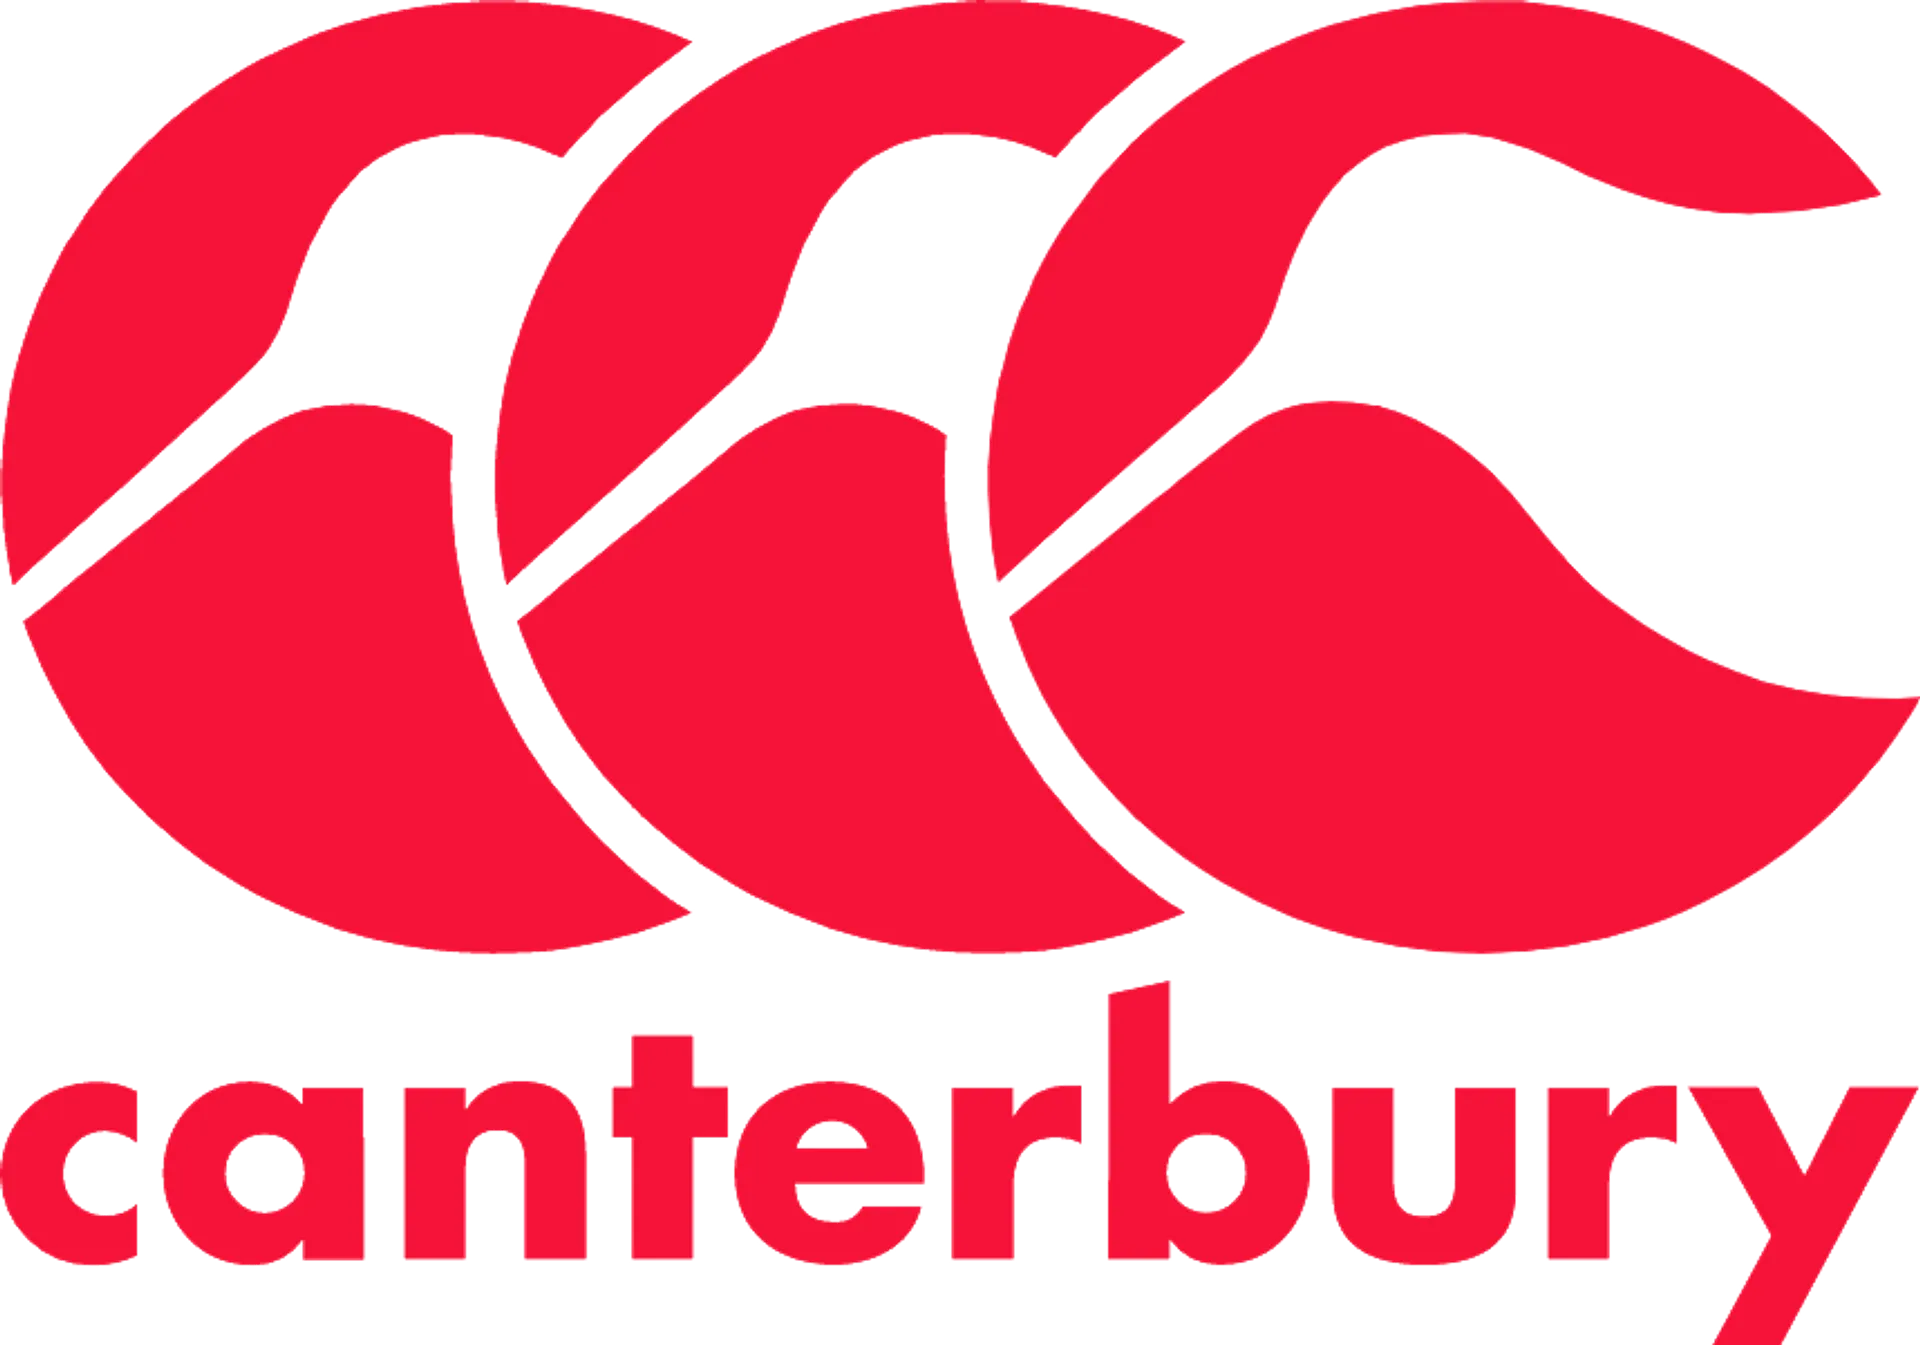  CANTERBURY logo. Current catalogue